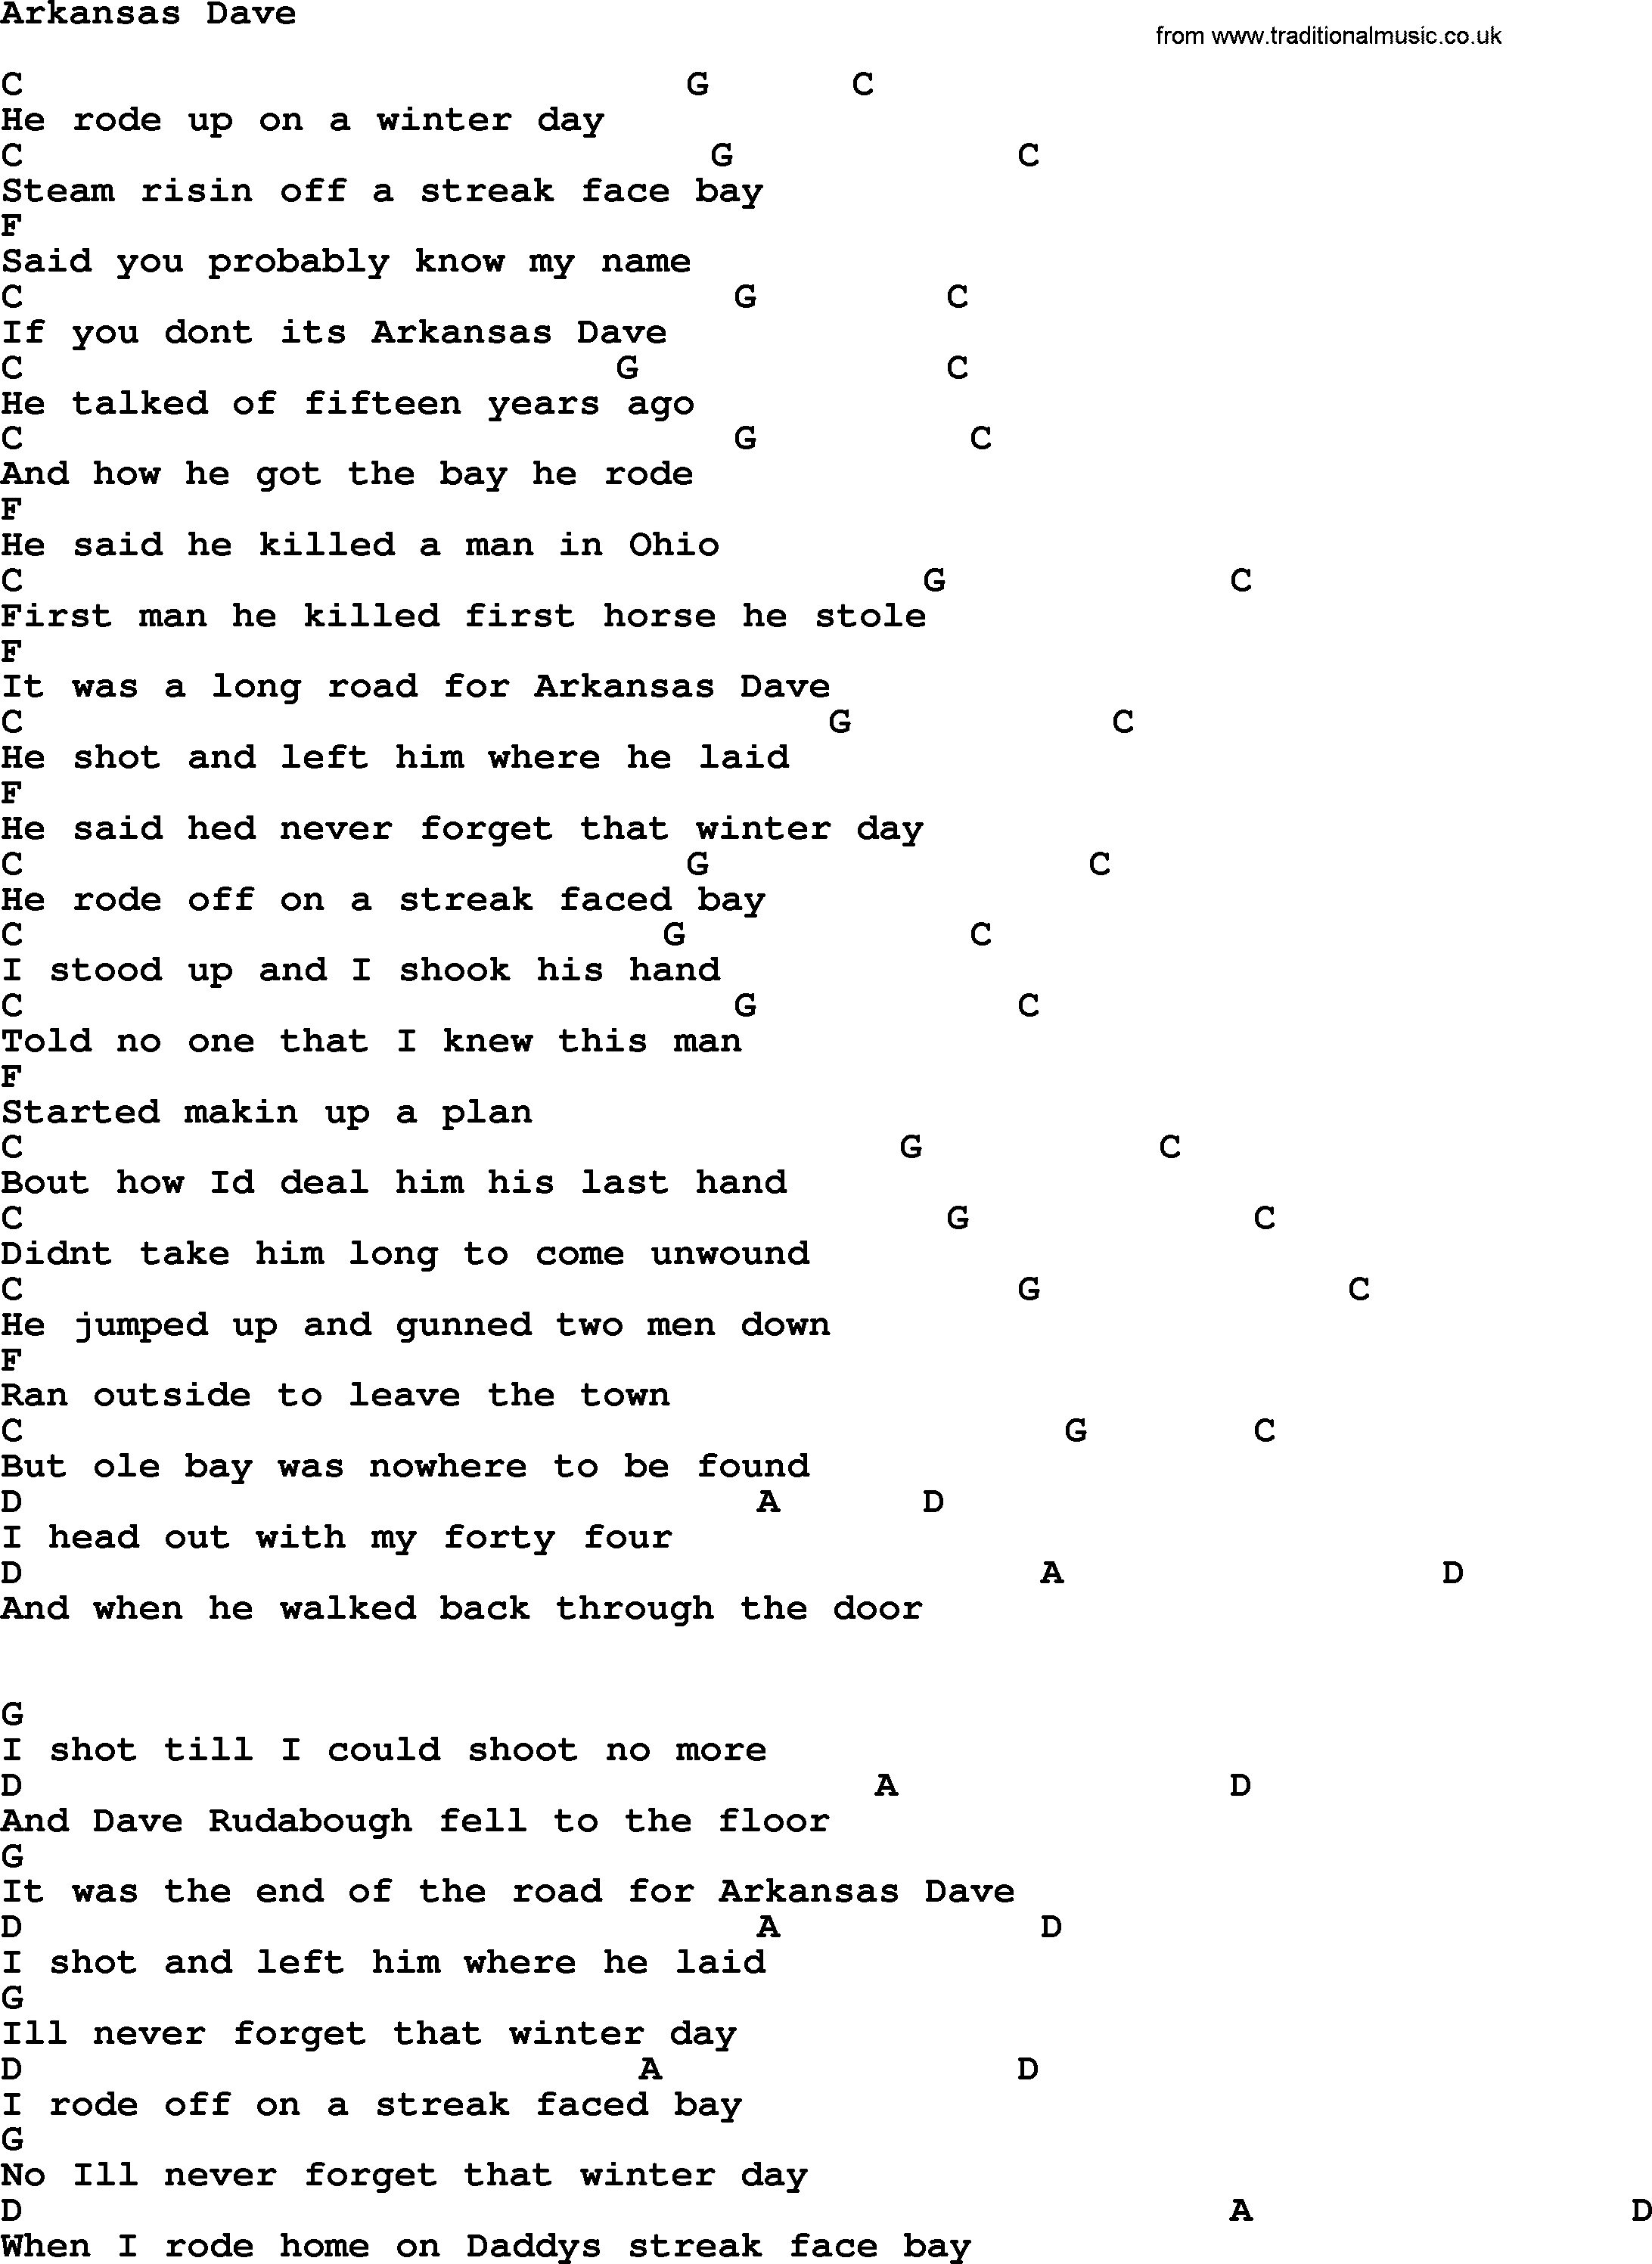 George Strait song: Arkansas Dave, lyrics and chords